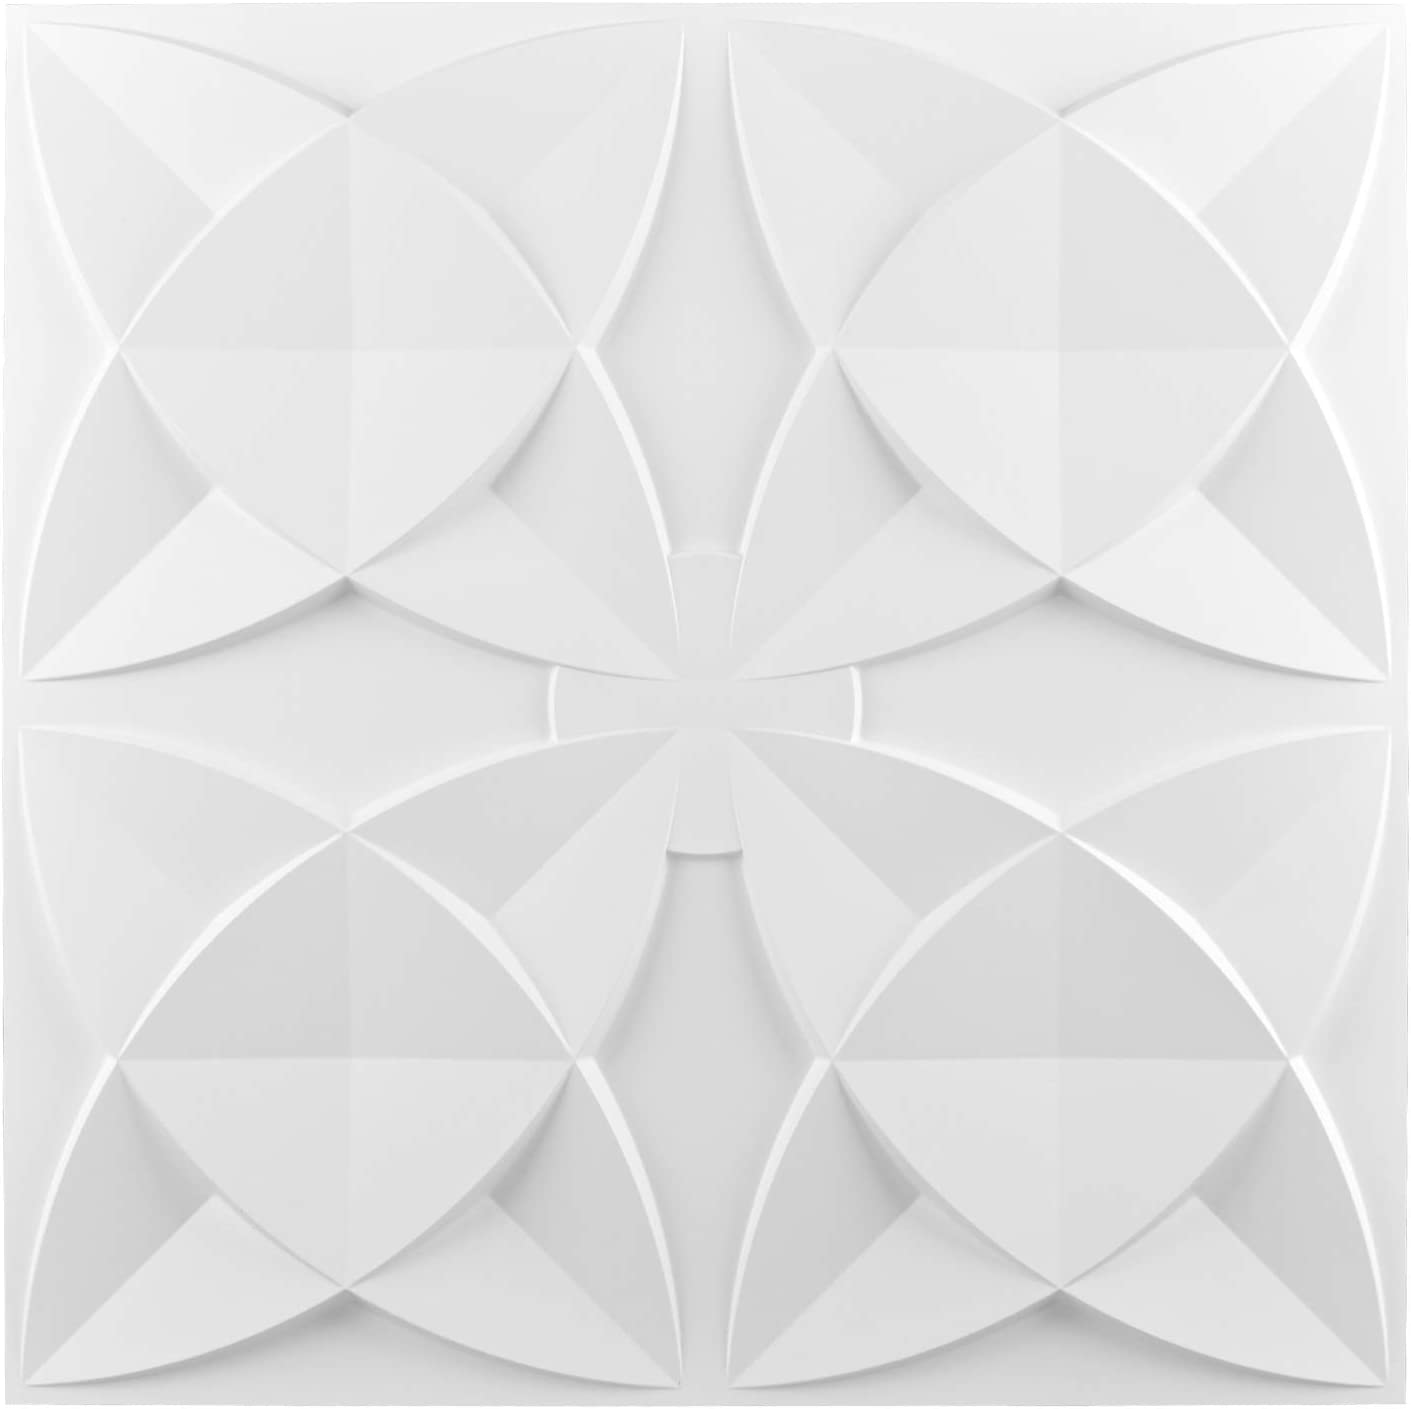 Art3d Decorative Drop Ceiling Tile 2x2 Pack of 12pcs, Glue up Ceiling Panel Square Relief in Matt White